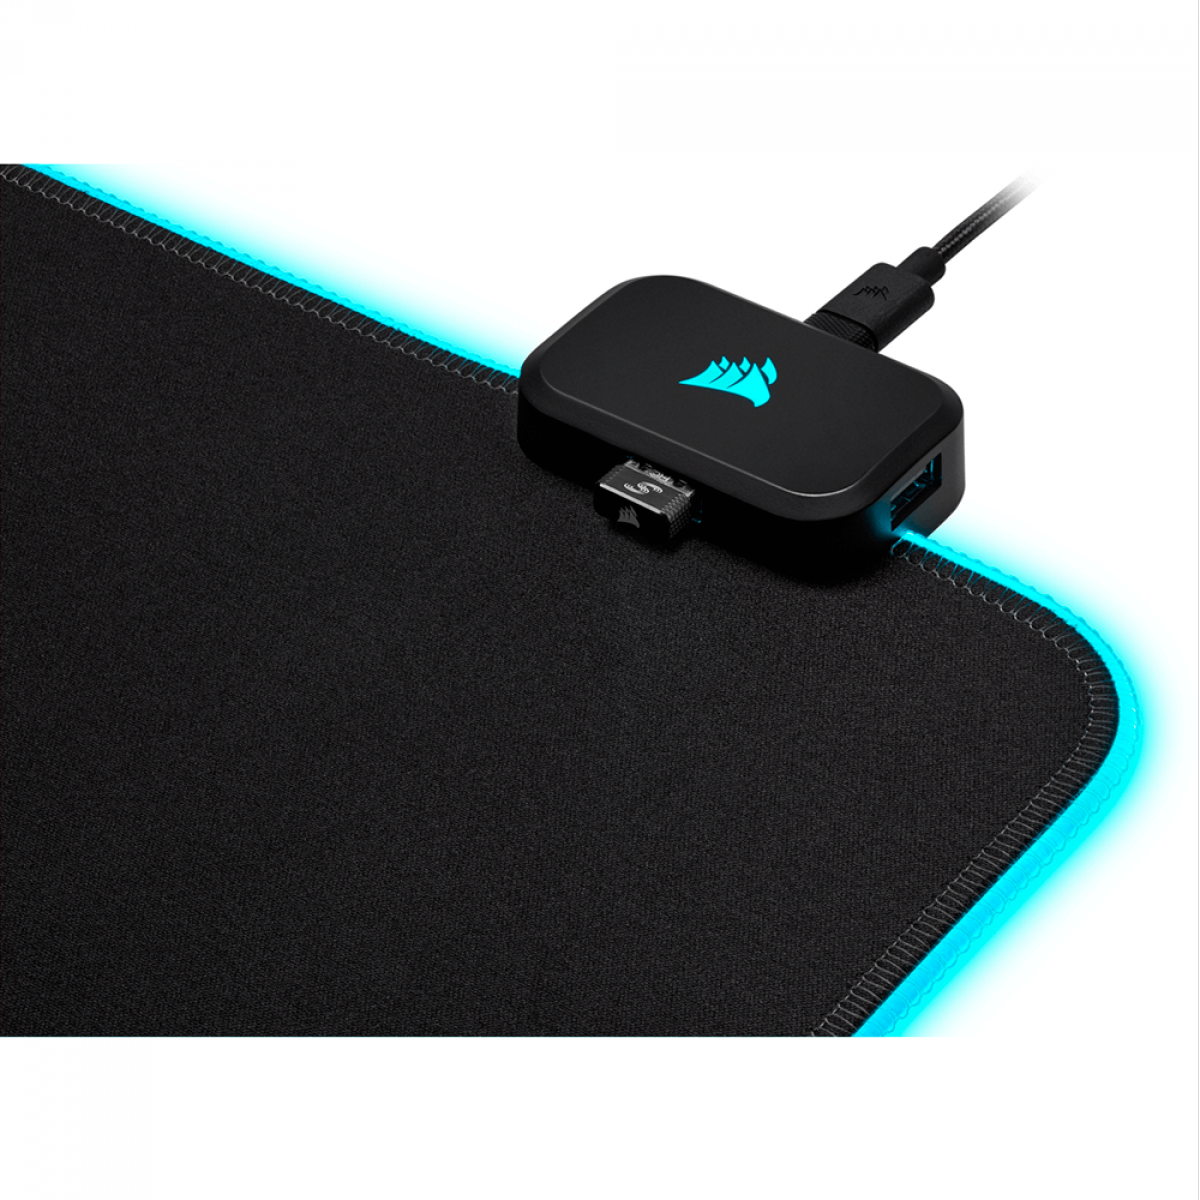 Mousepad Gamer Corsair MM700 Extended, RGB, black, 930x400mm, CH-9417070-WW  